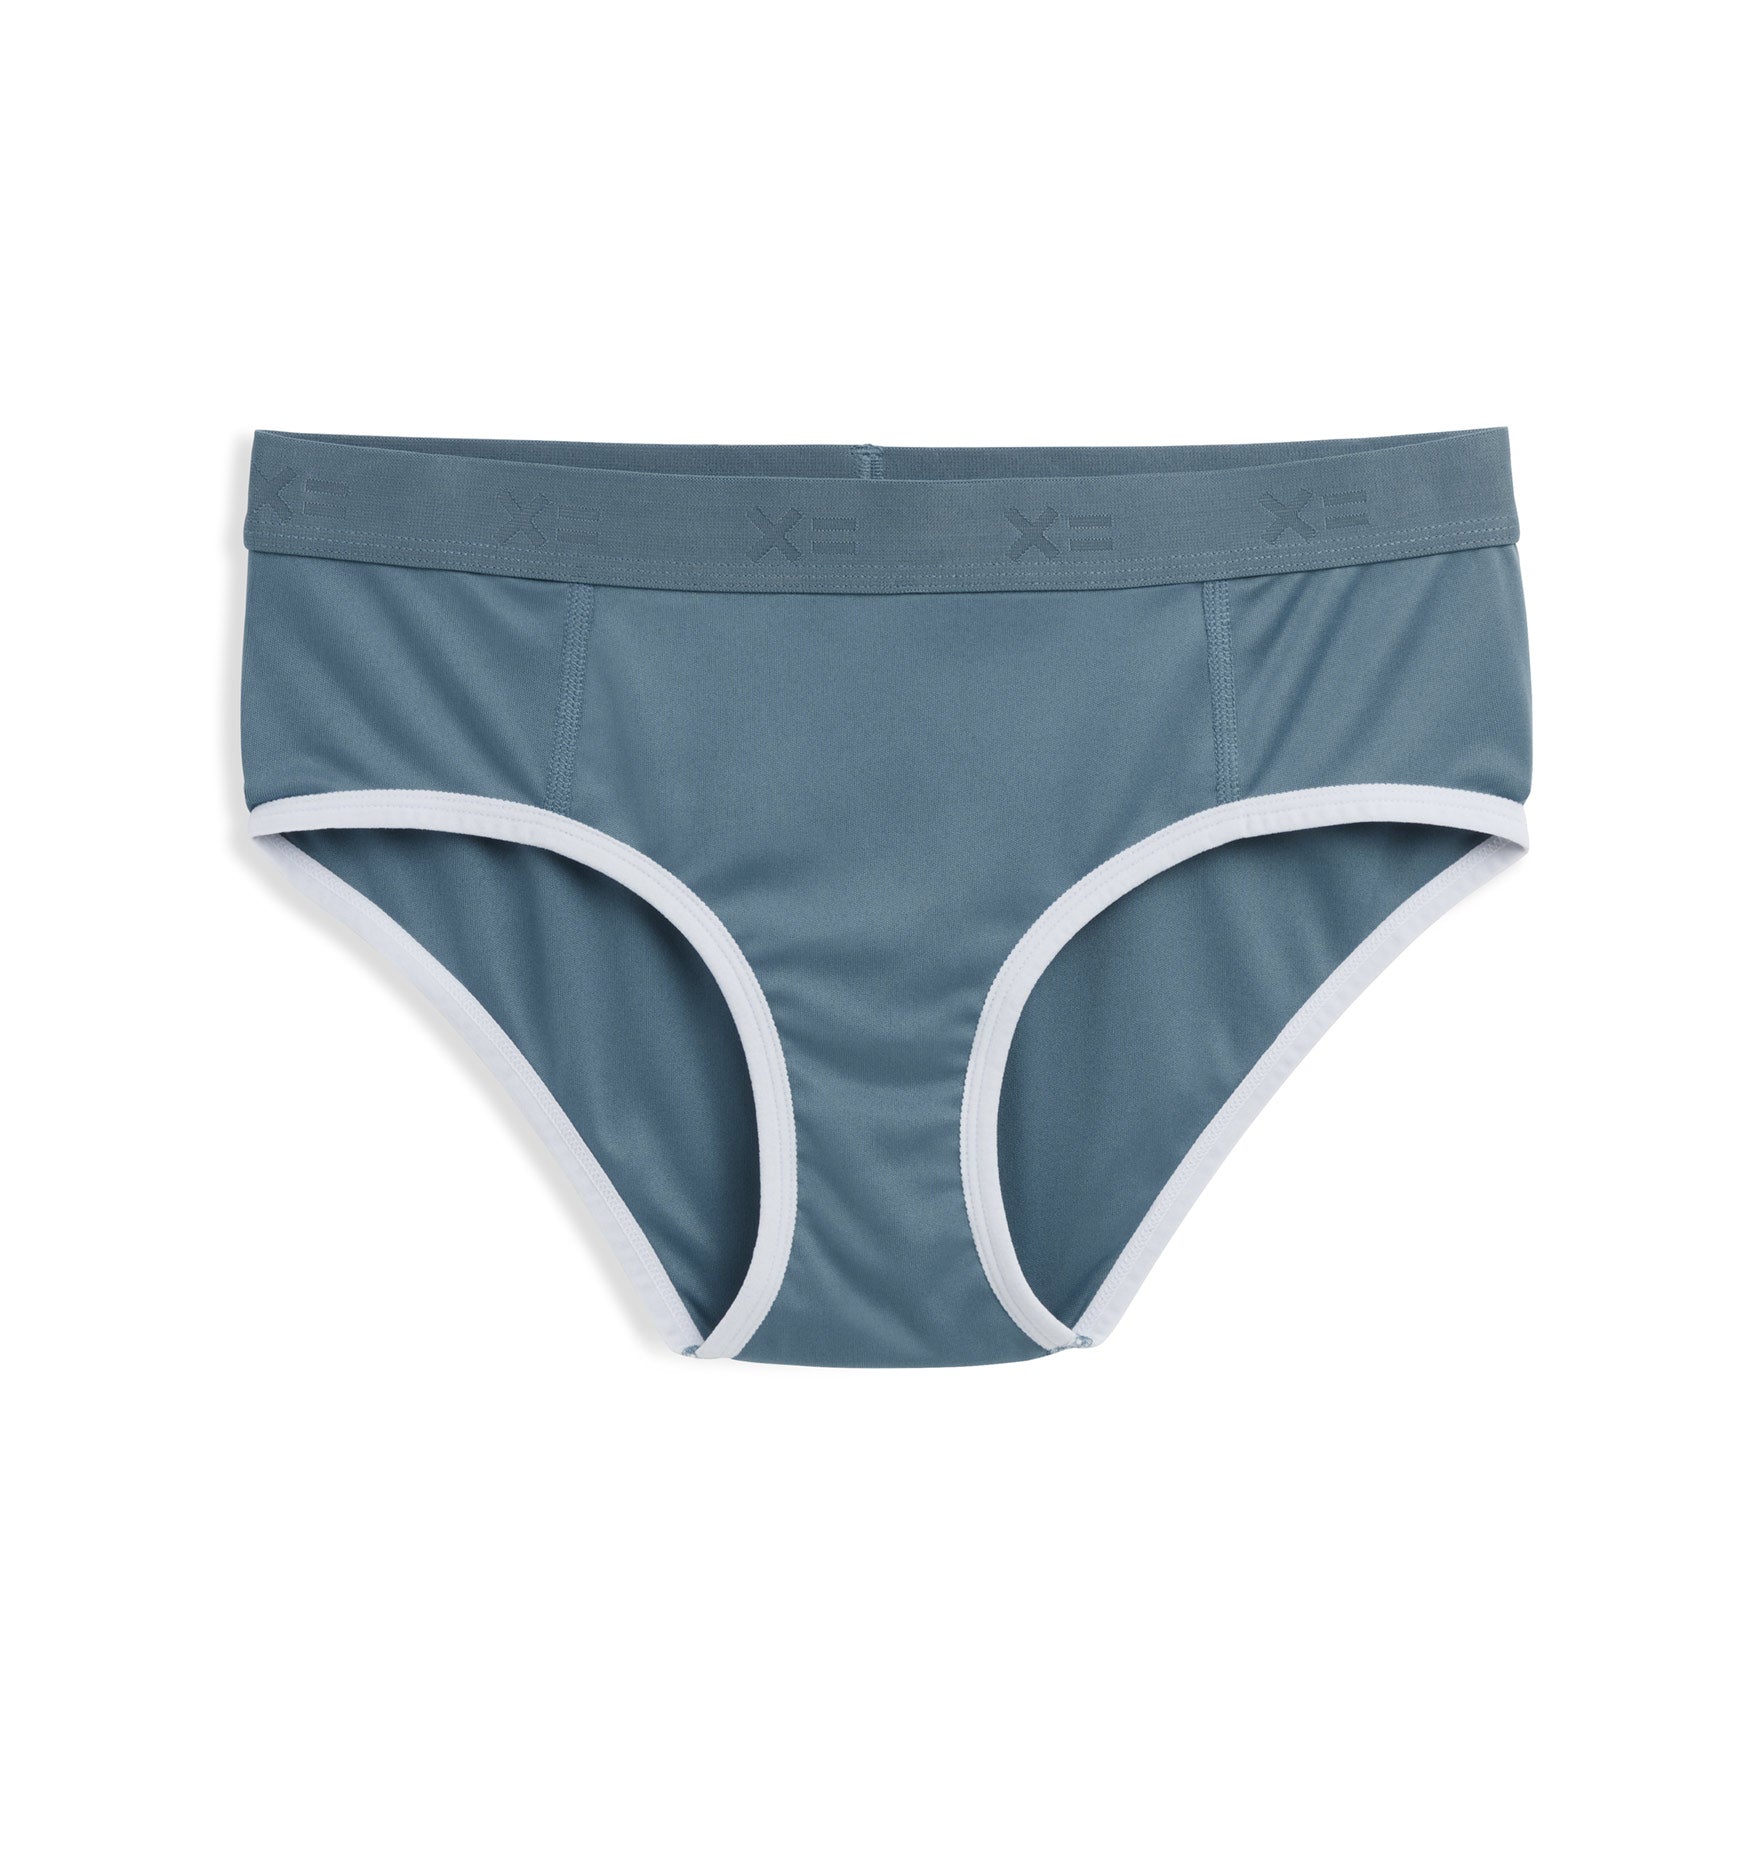 Basic Tucking Underwear by BWYA – Other Nature GmbH